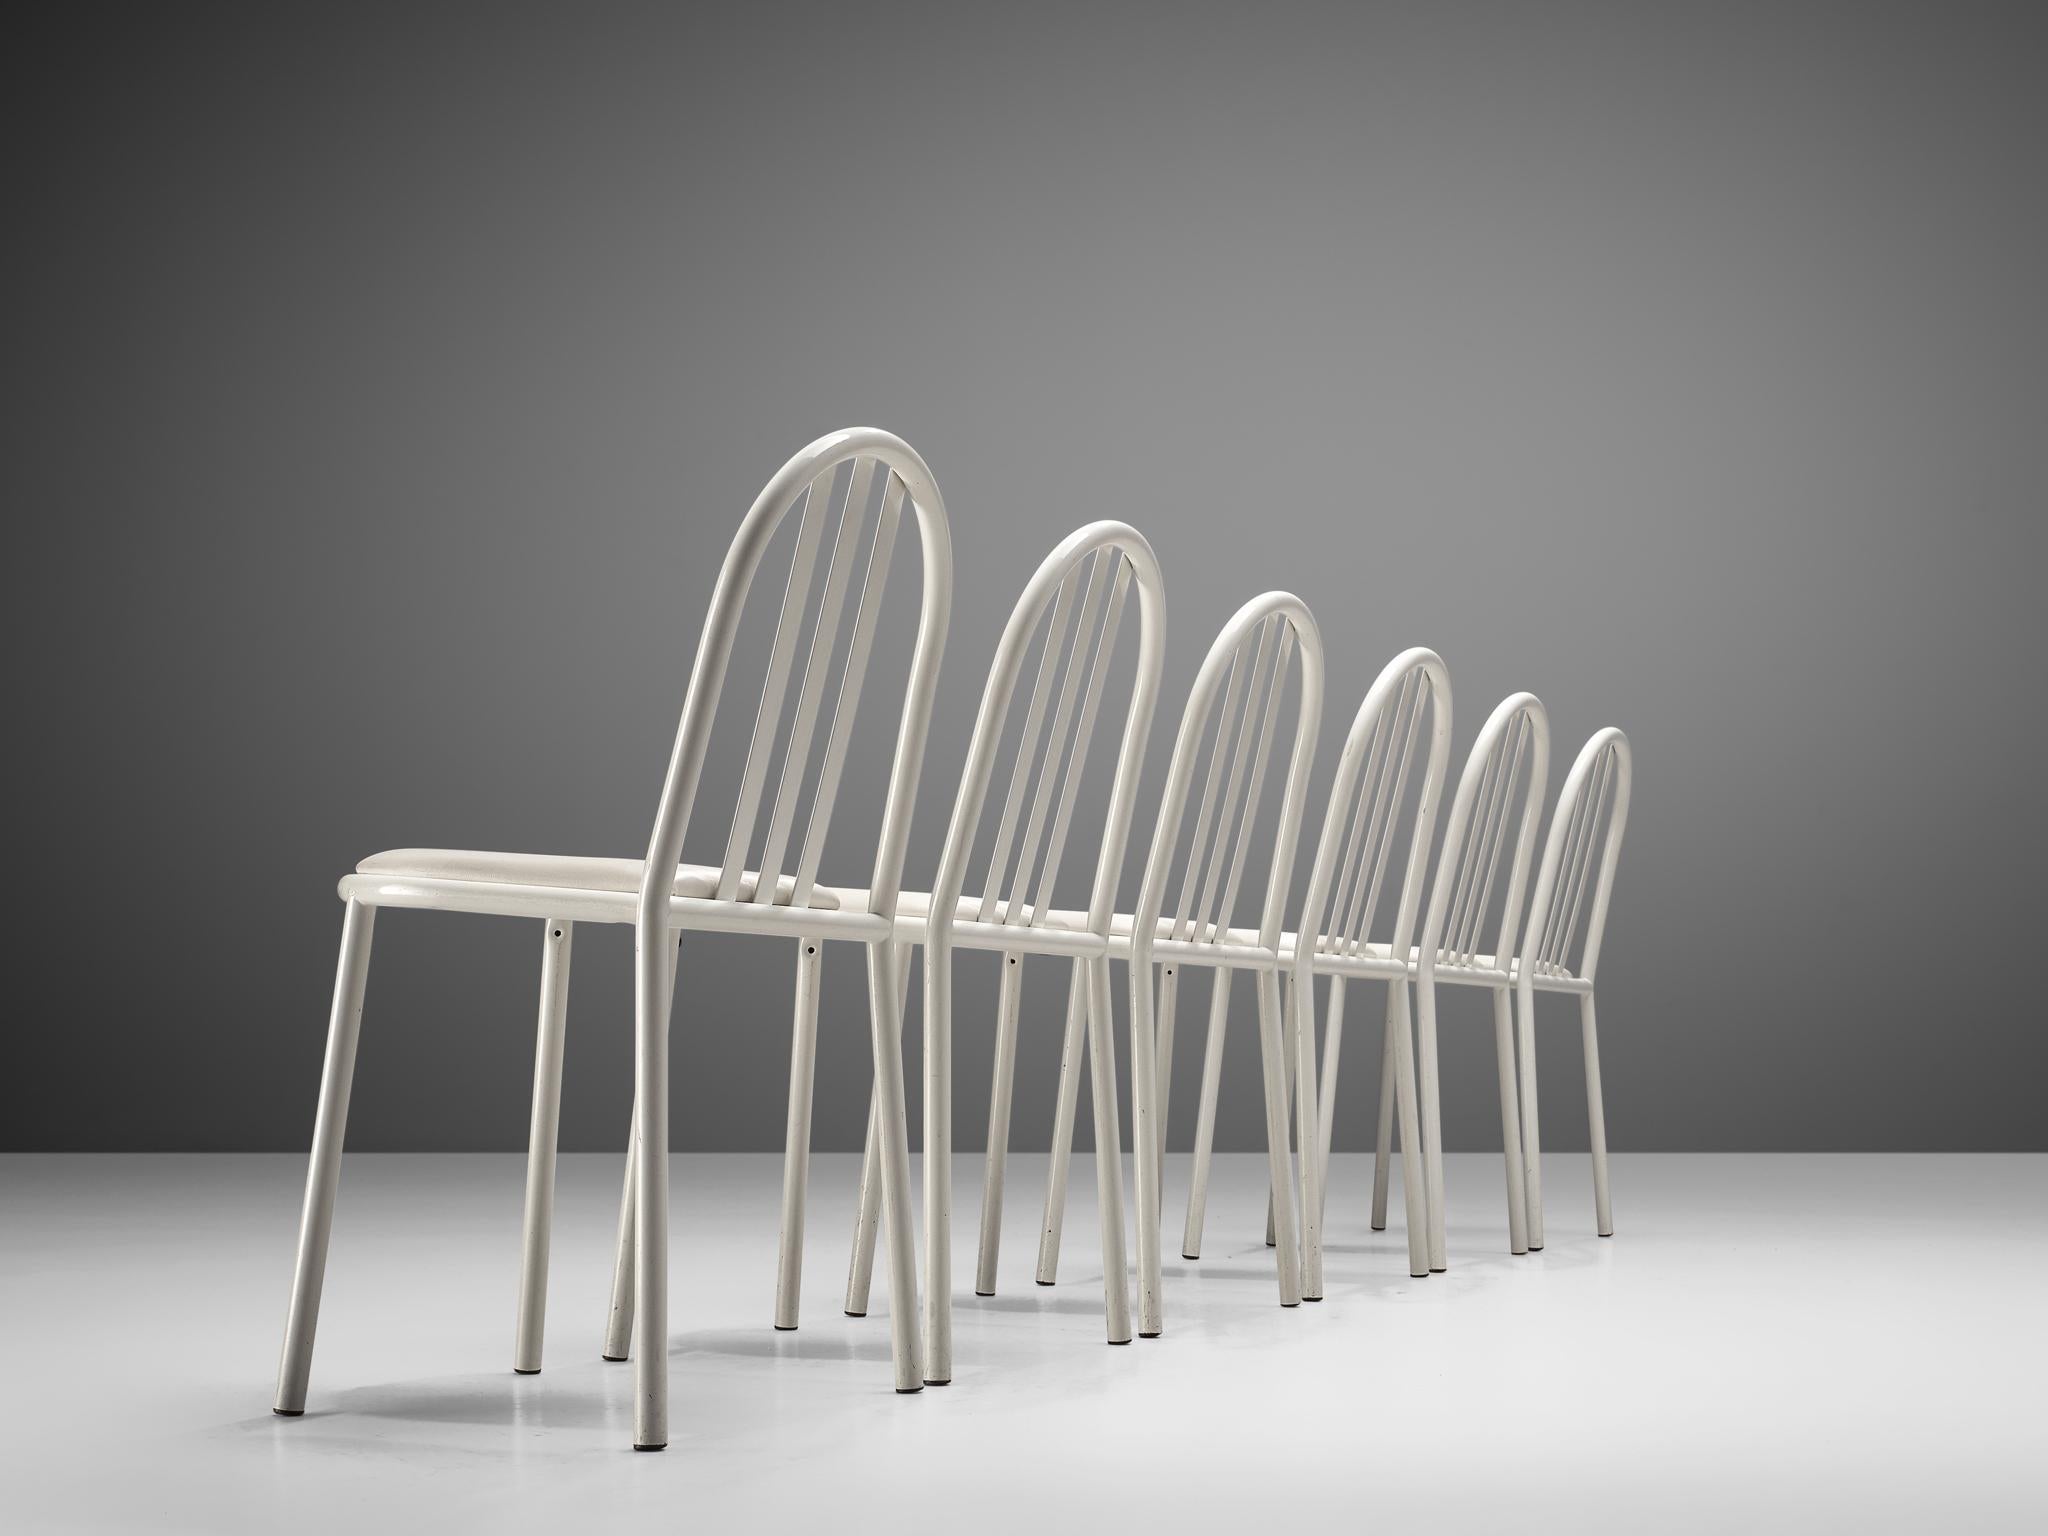 French Set of Twelve White Tubular Steel Chairs by Robert Mallet Stevens